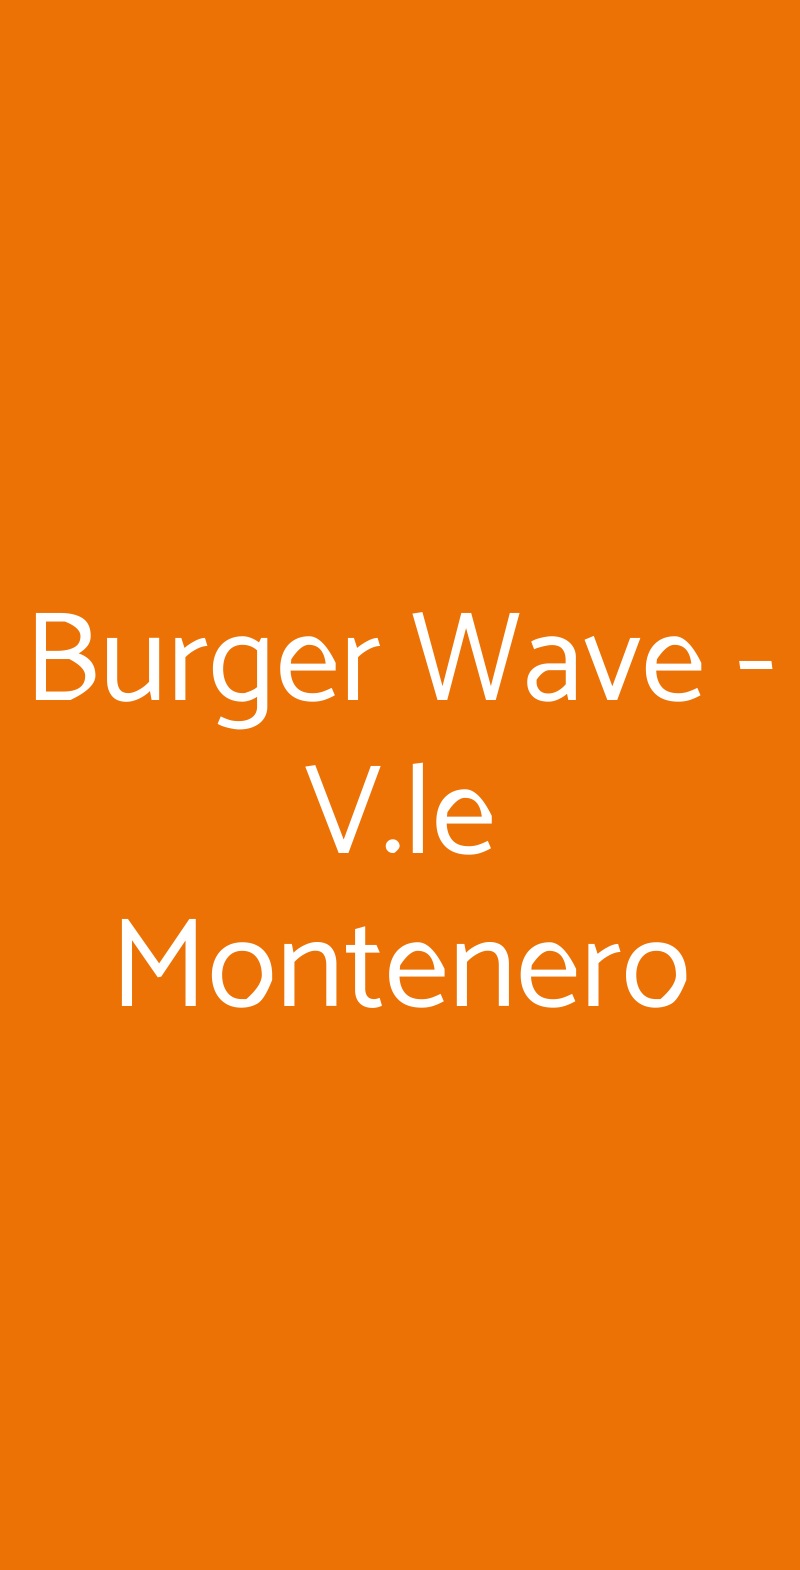 Burger Wave - V.le Montenero Milano menù 1 pagina